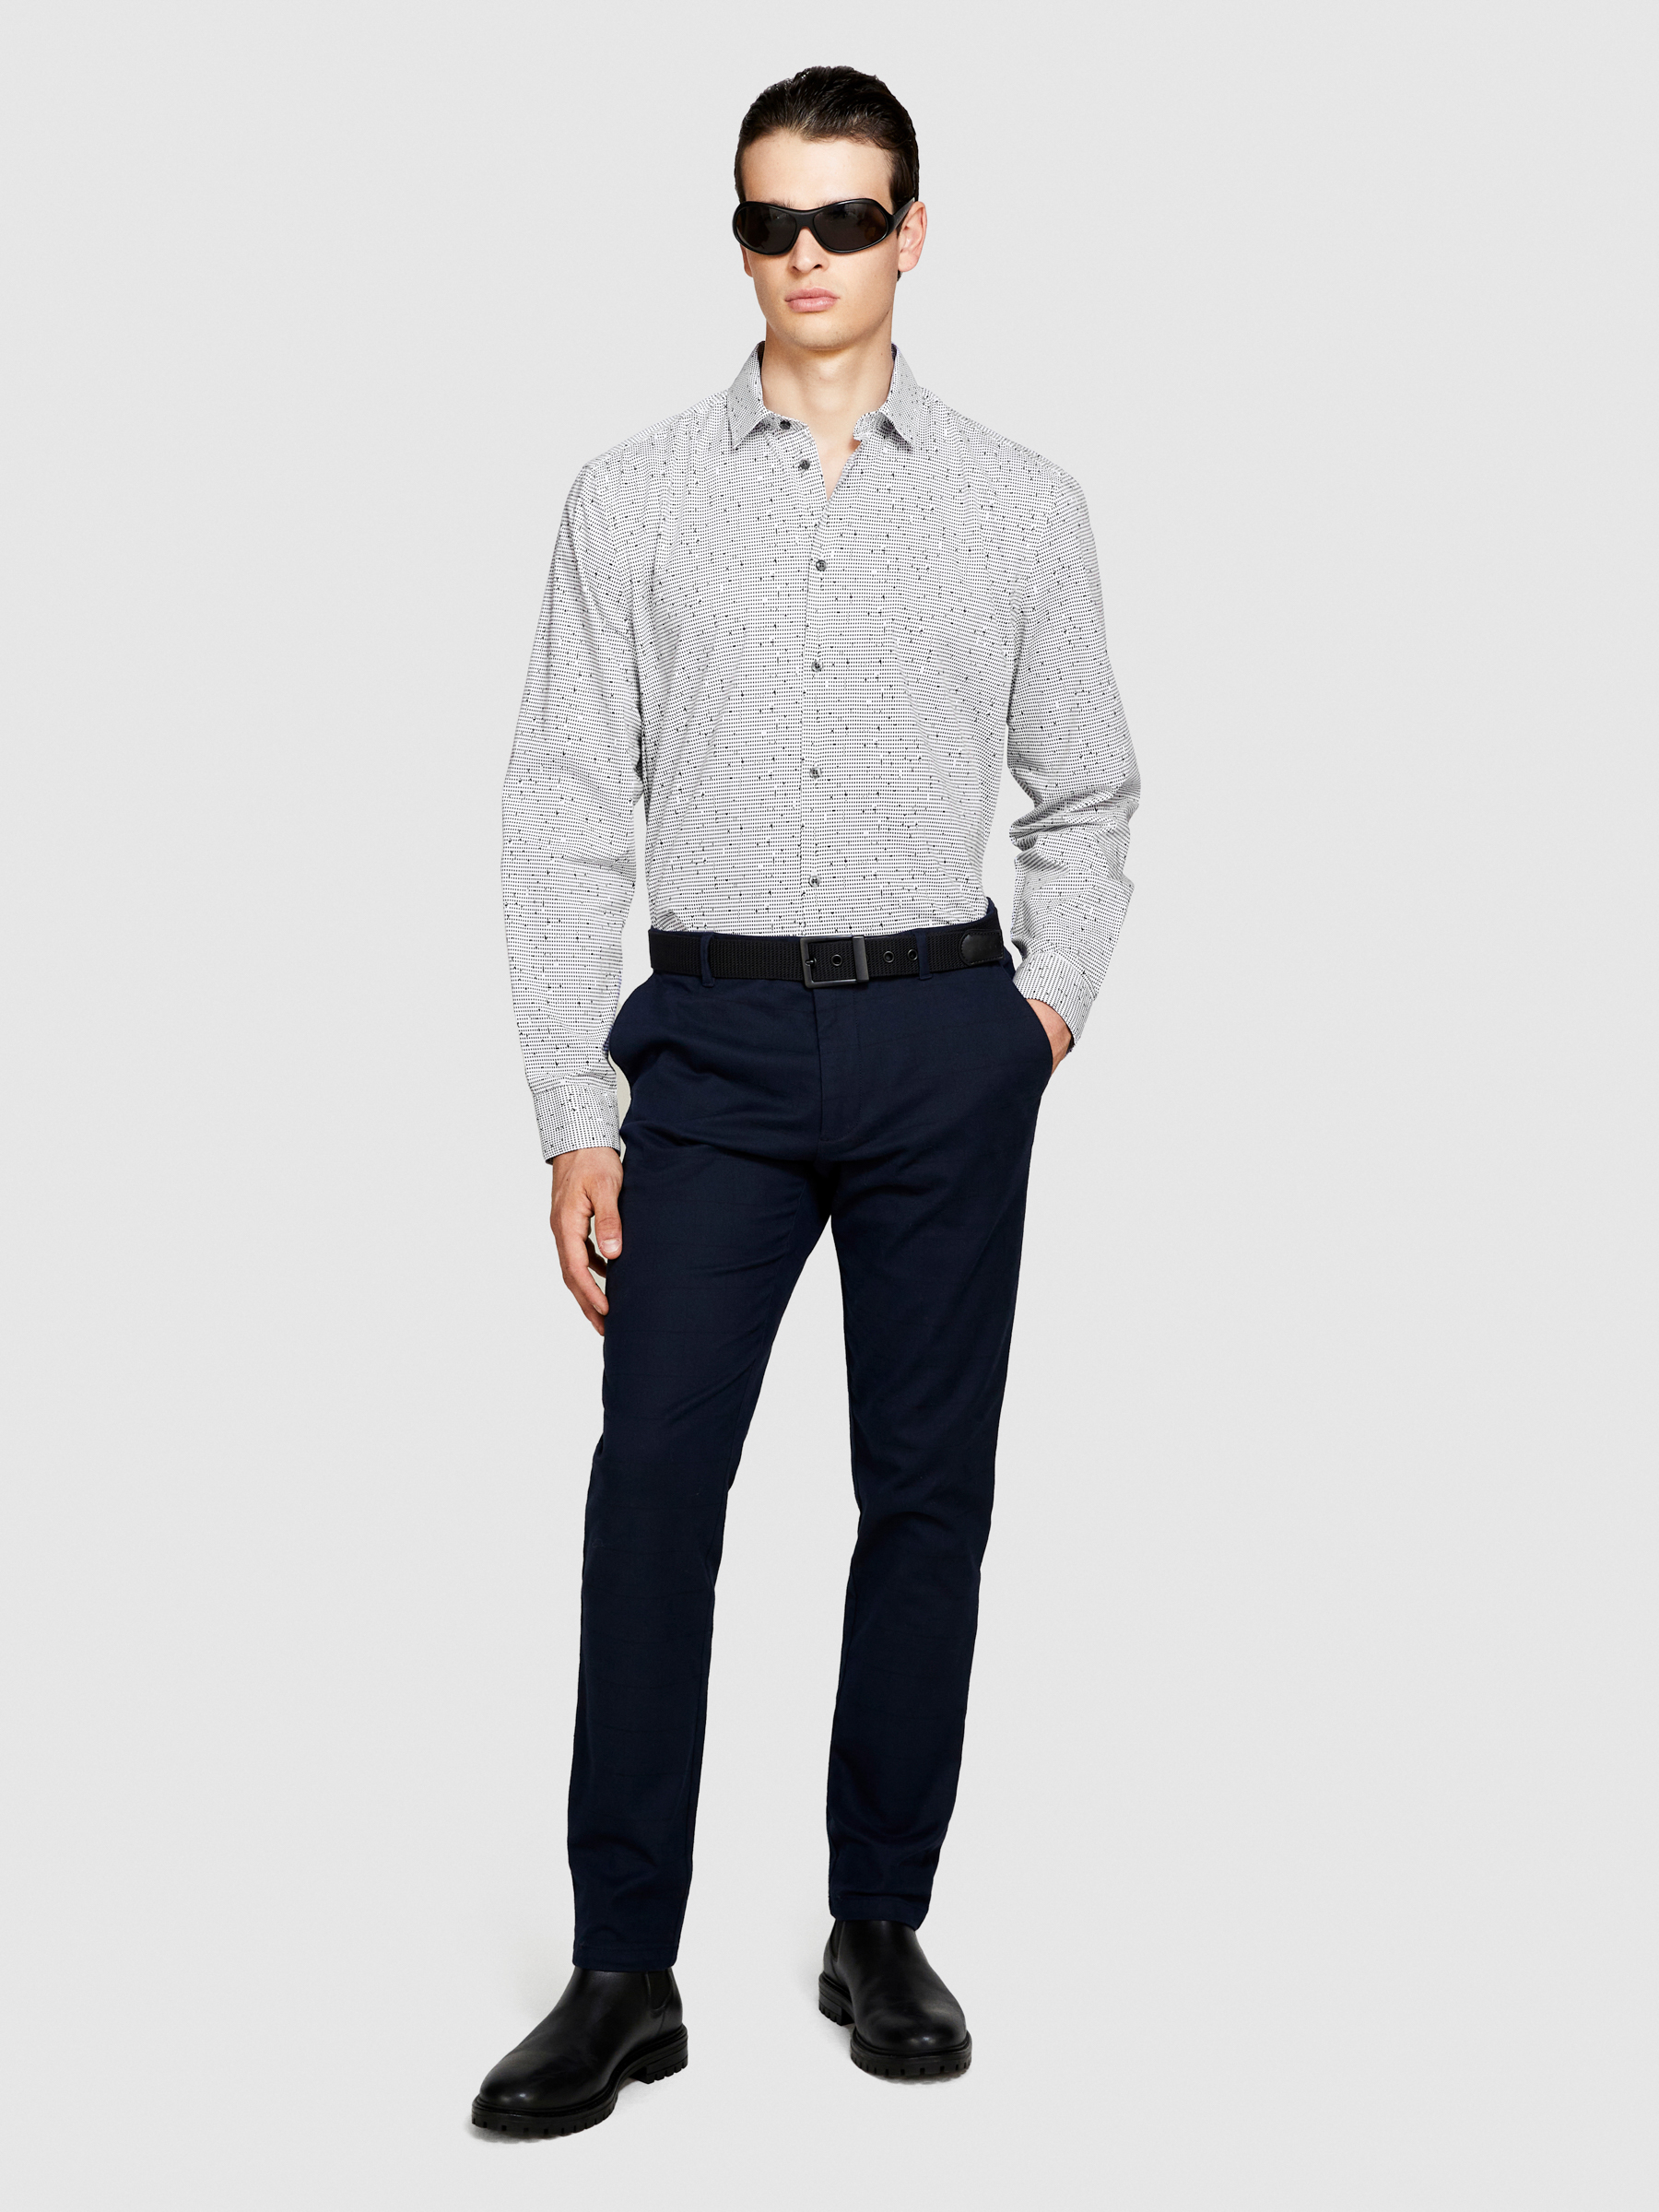 Sisley - Printed Shirt, Man, Gray, Size: XL